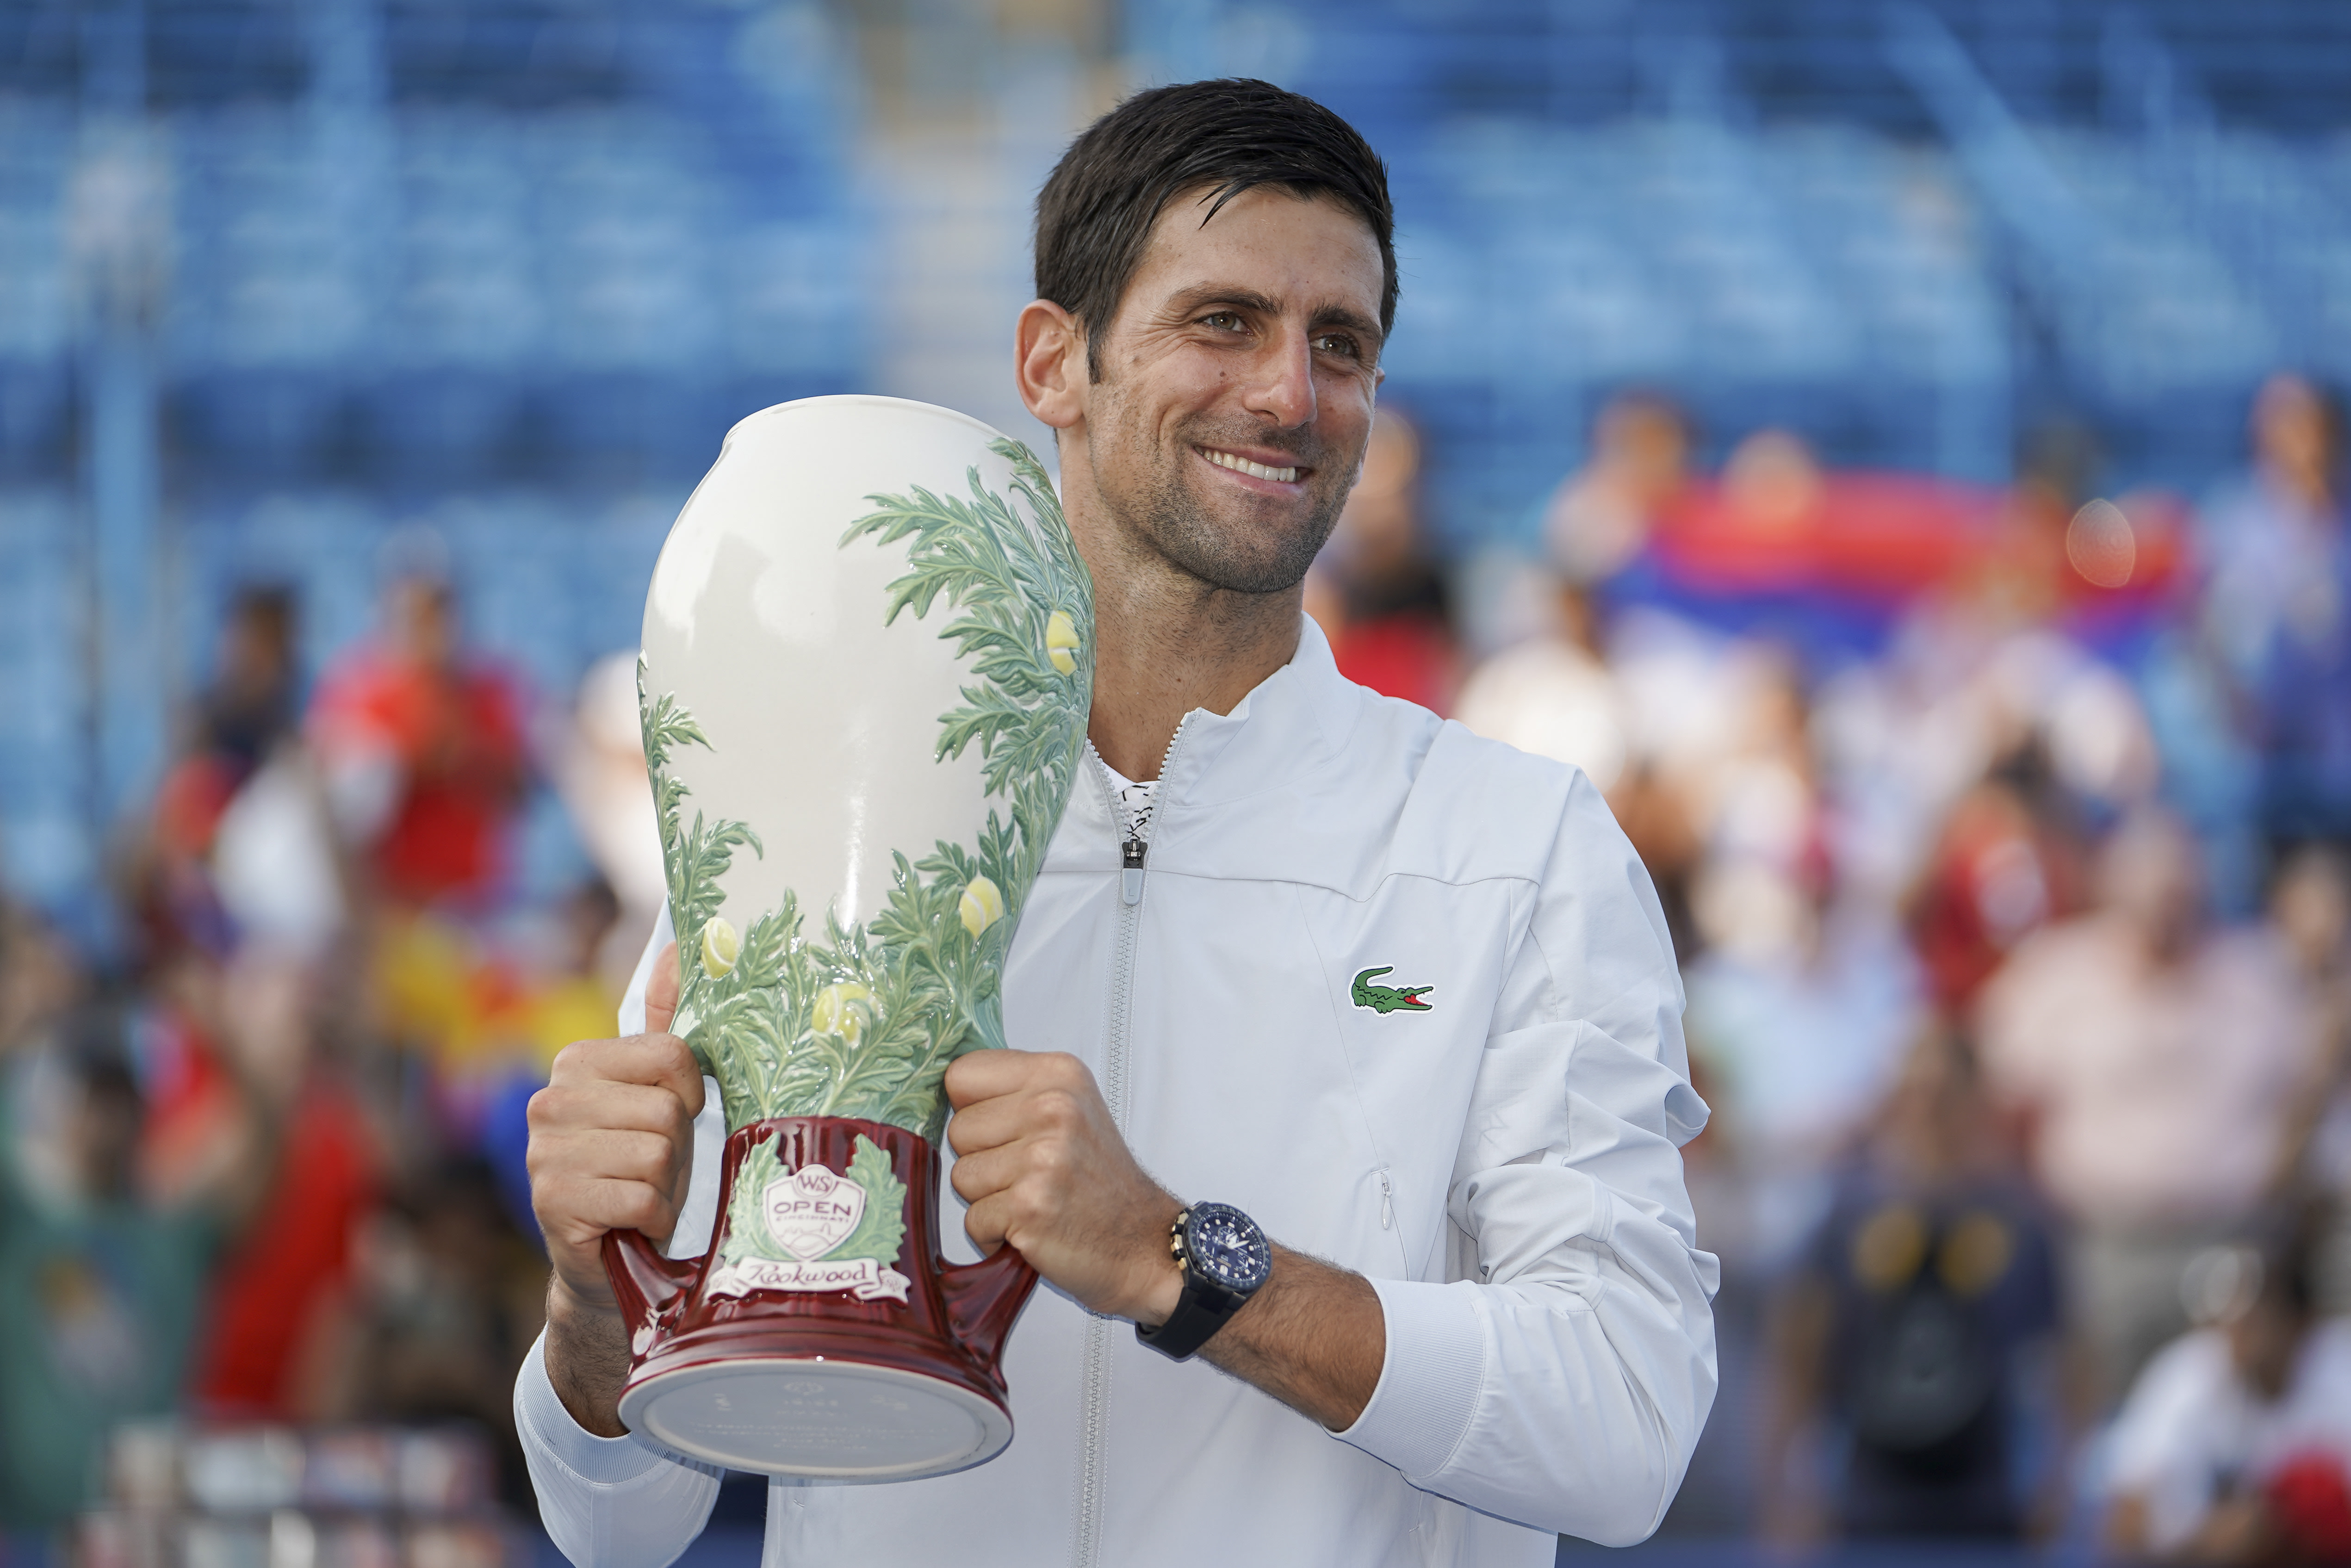 Putting Novak Djokovics ATP Masters 1000 collection in perspective